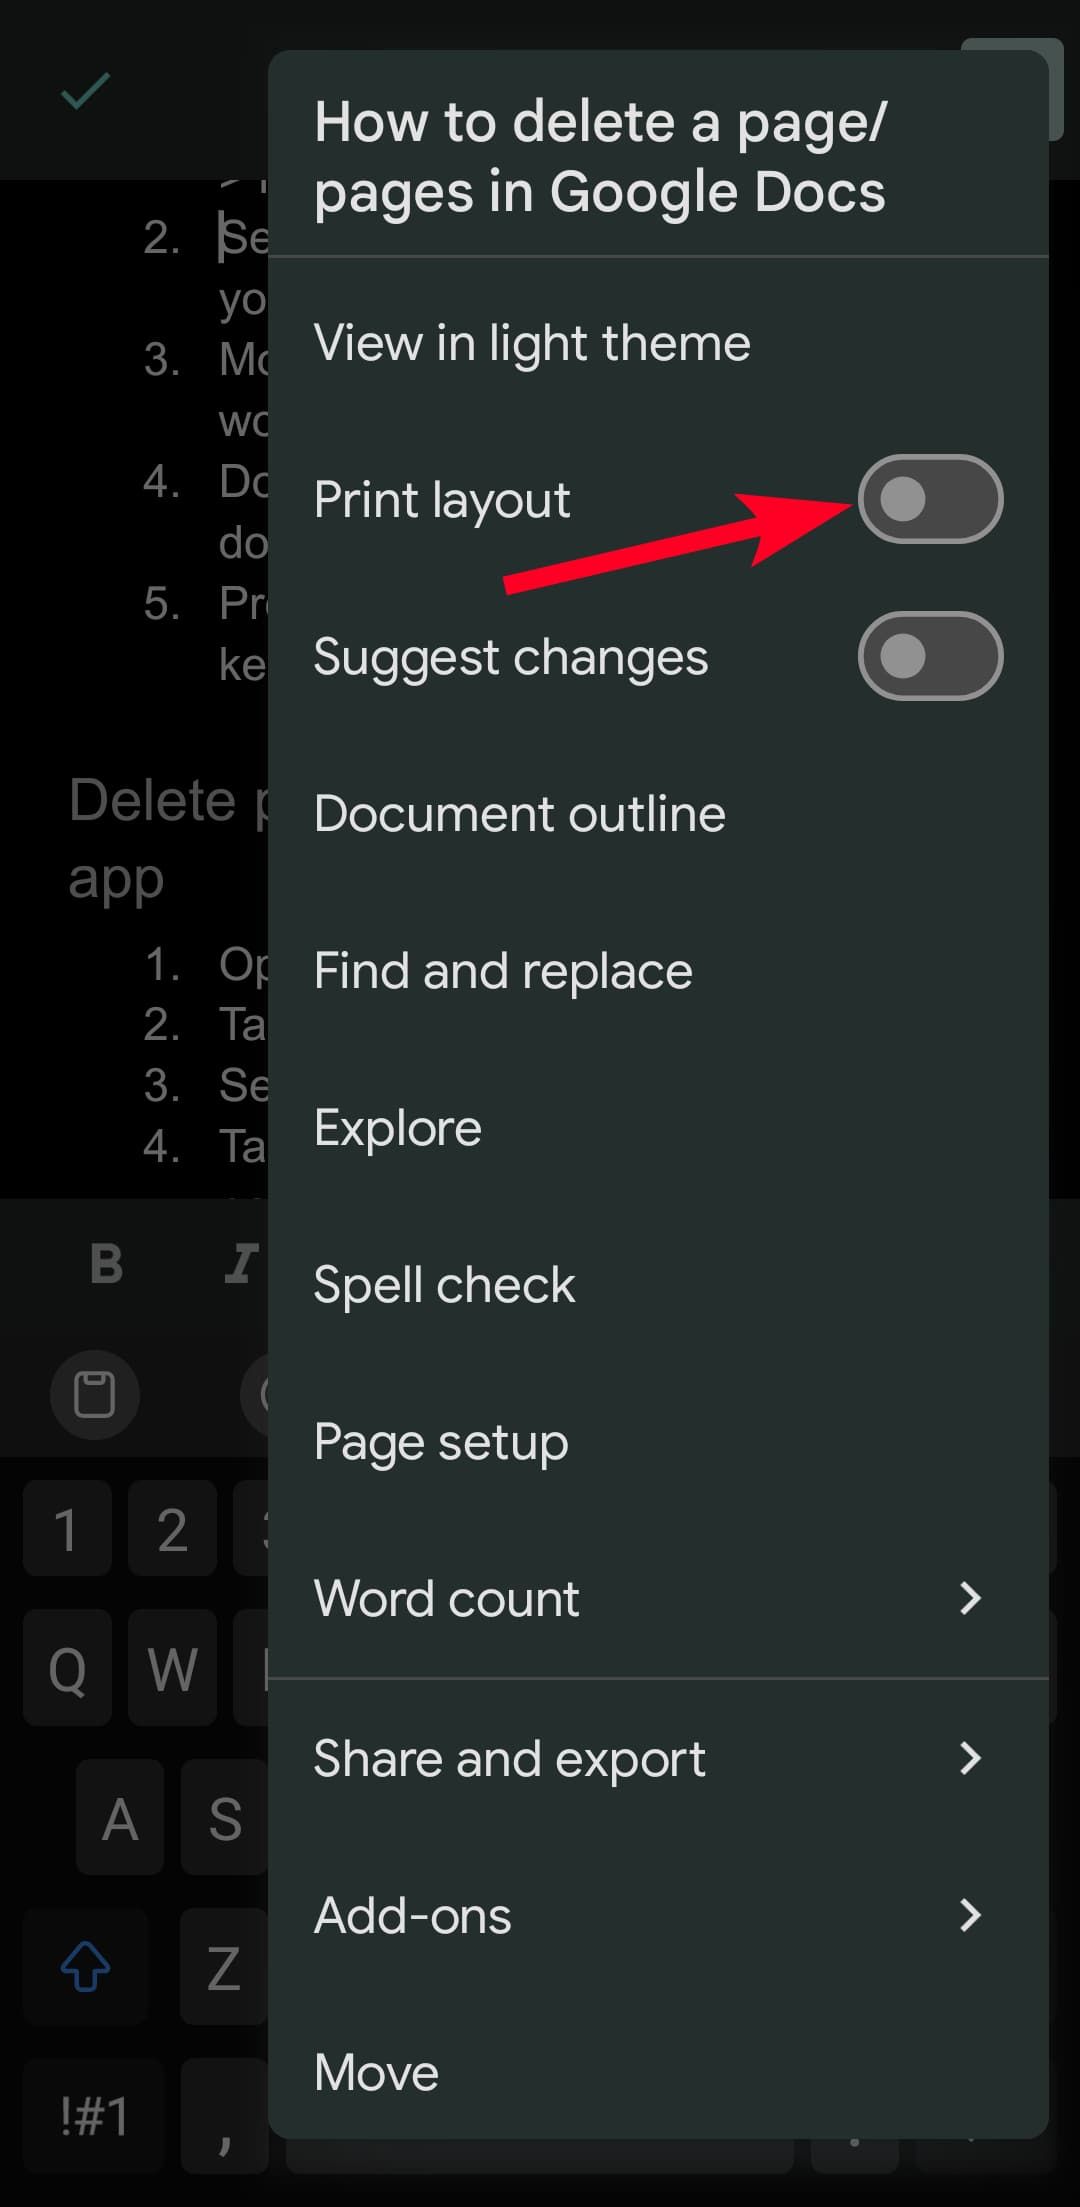 Print layout option in Google Docs mobile app